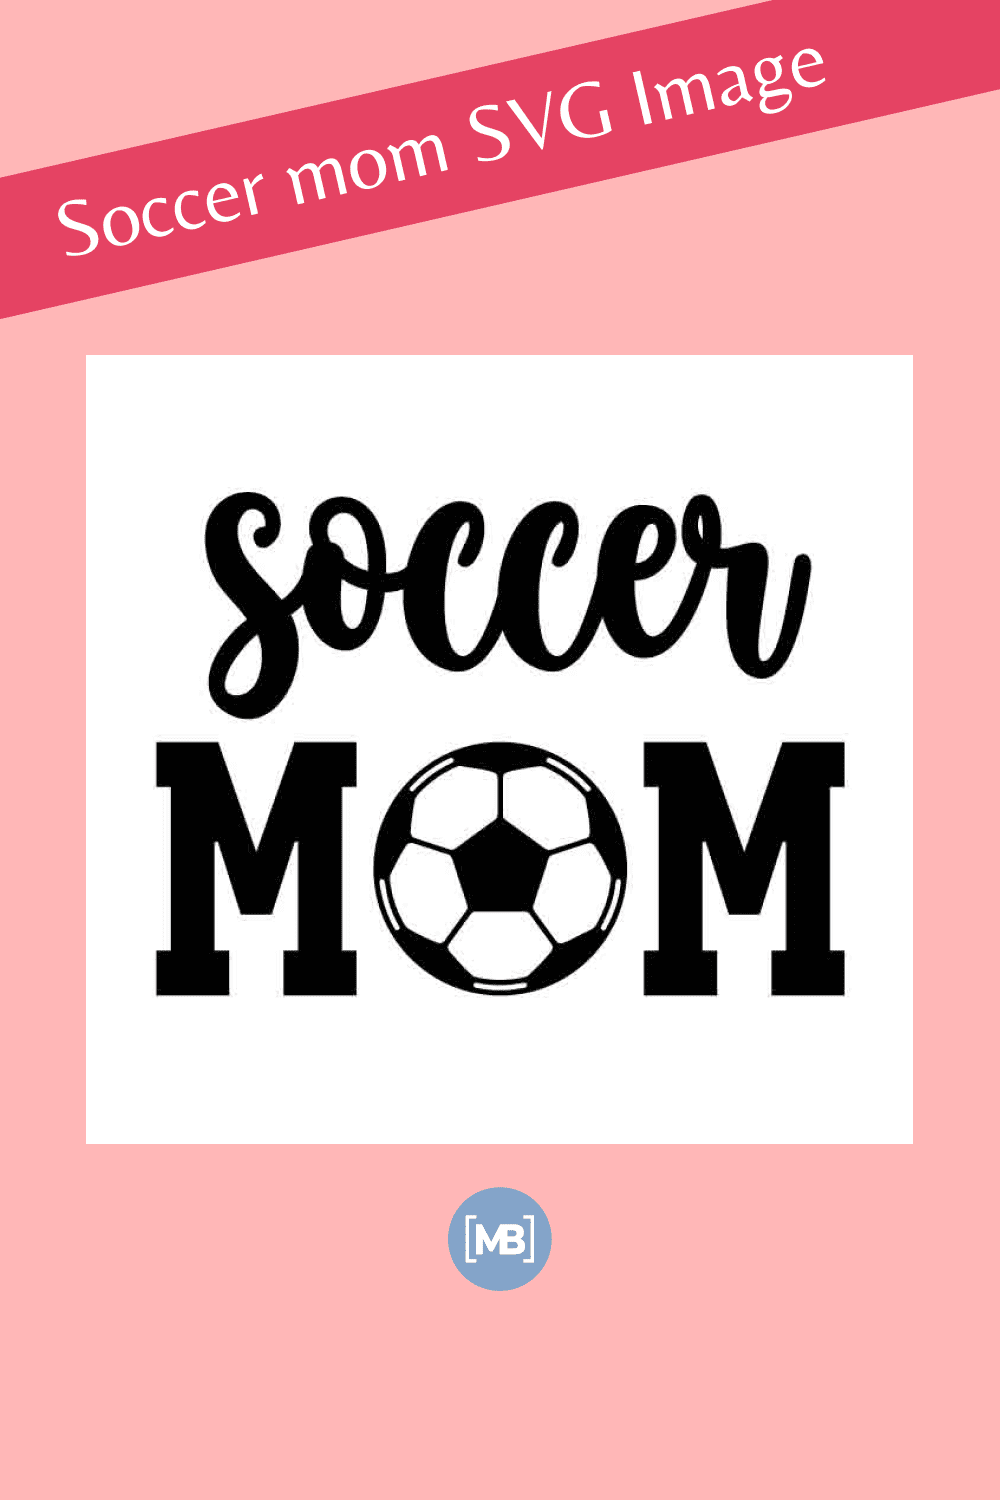 Soccer mom SVG Image.